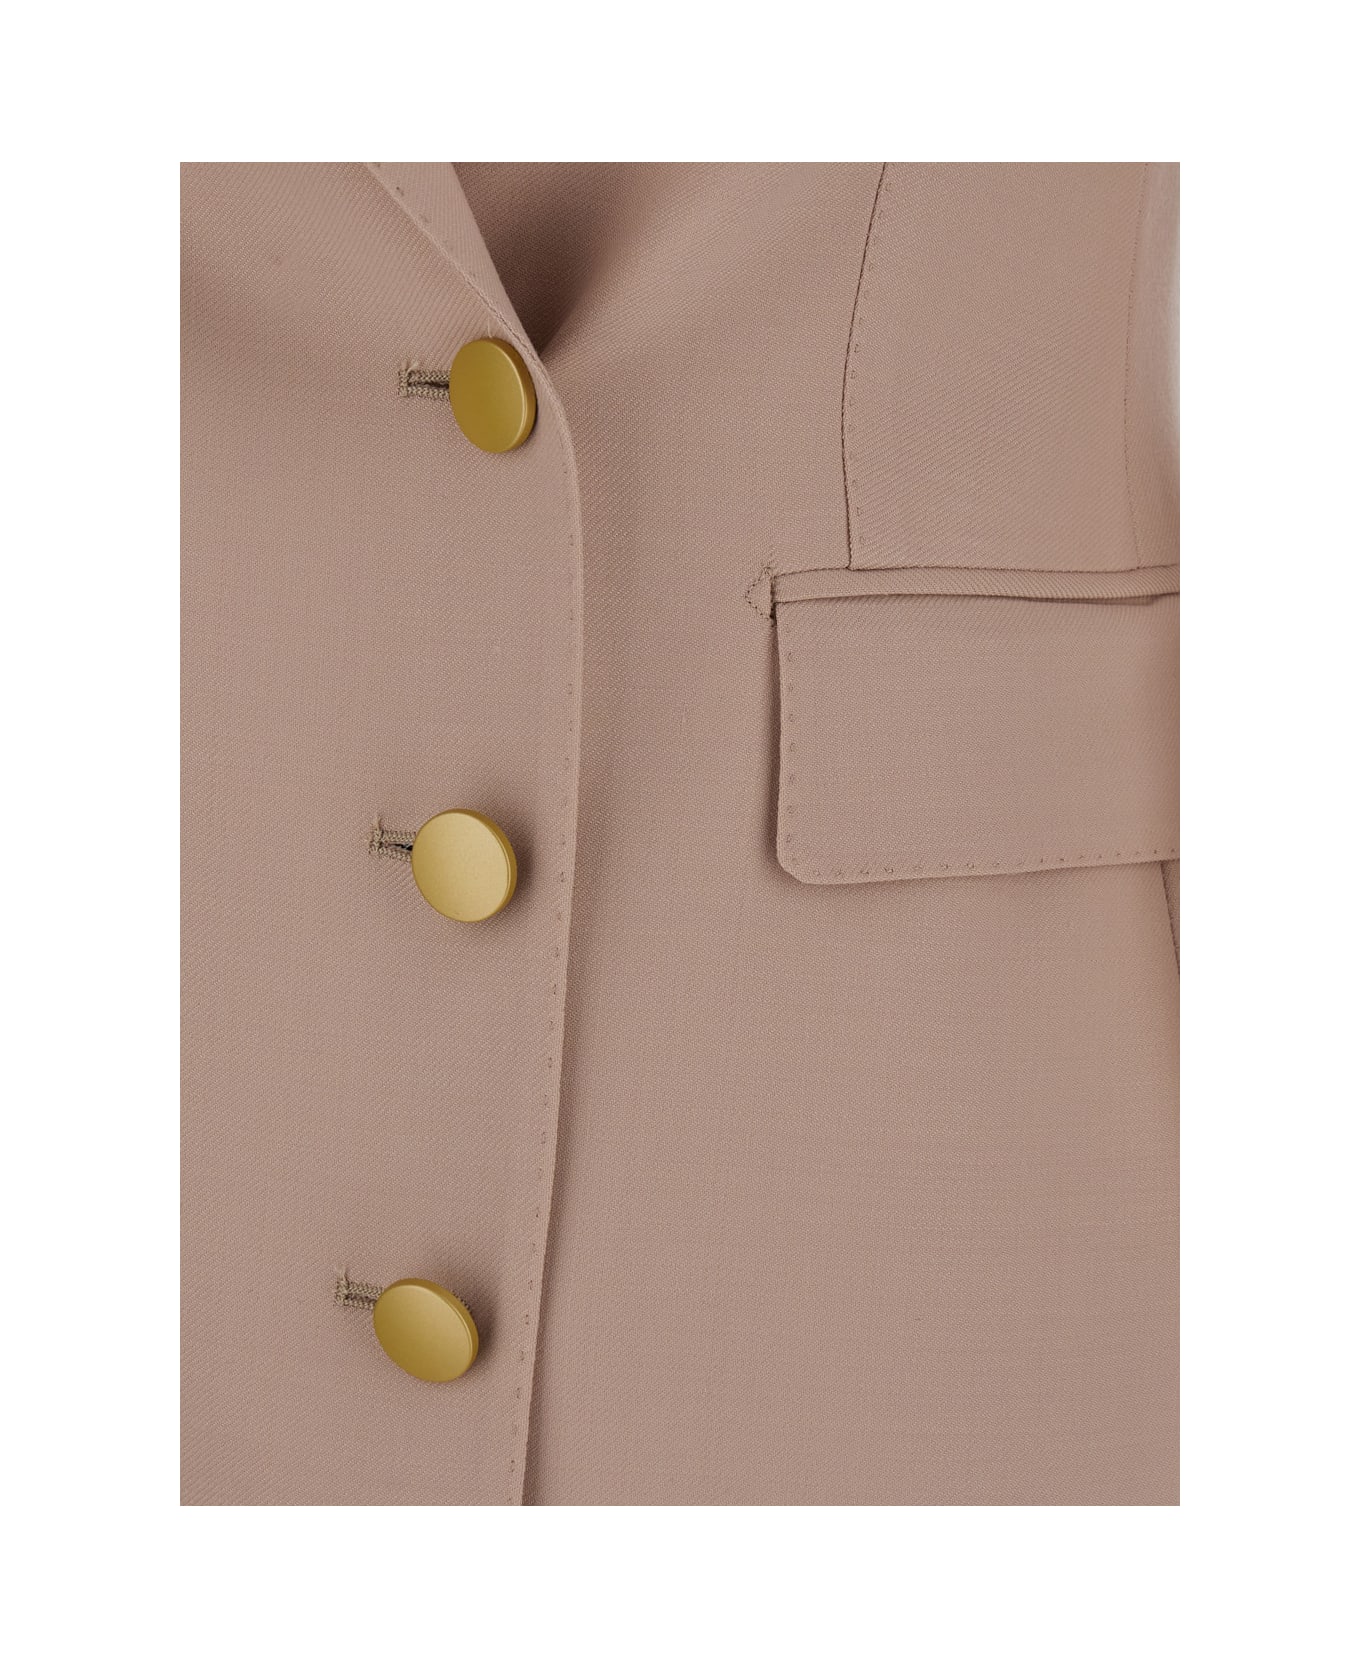 Tagliatore Beige Blazer Dress With Buttons In Wool Blend Stretch Woman - Beige レインコート